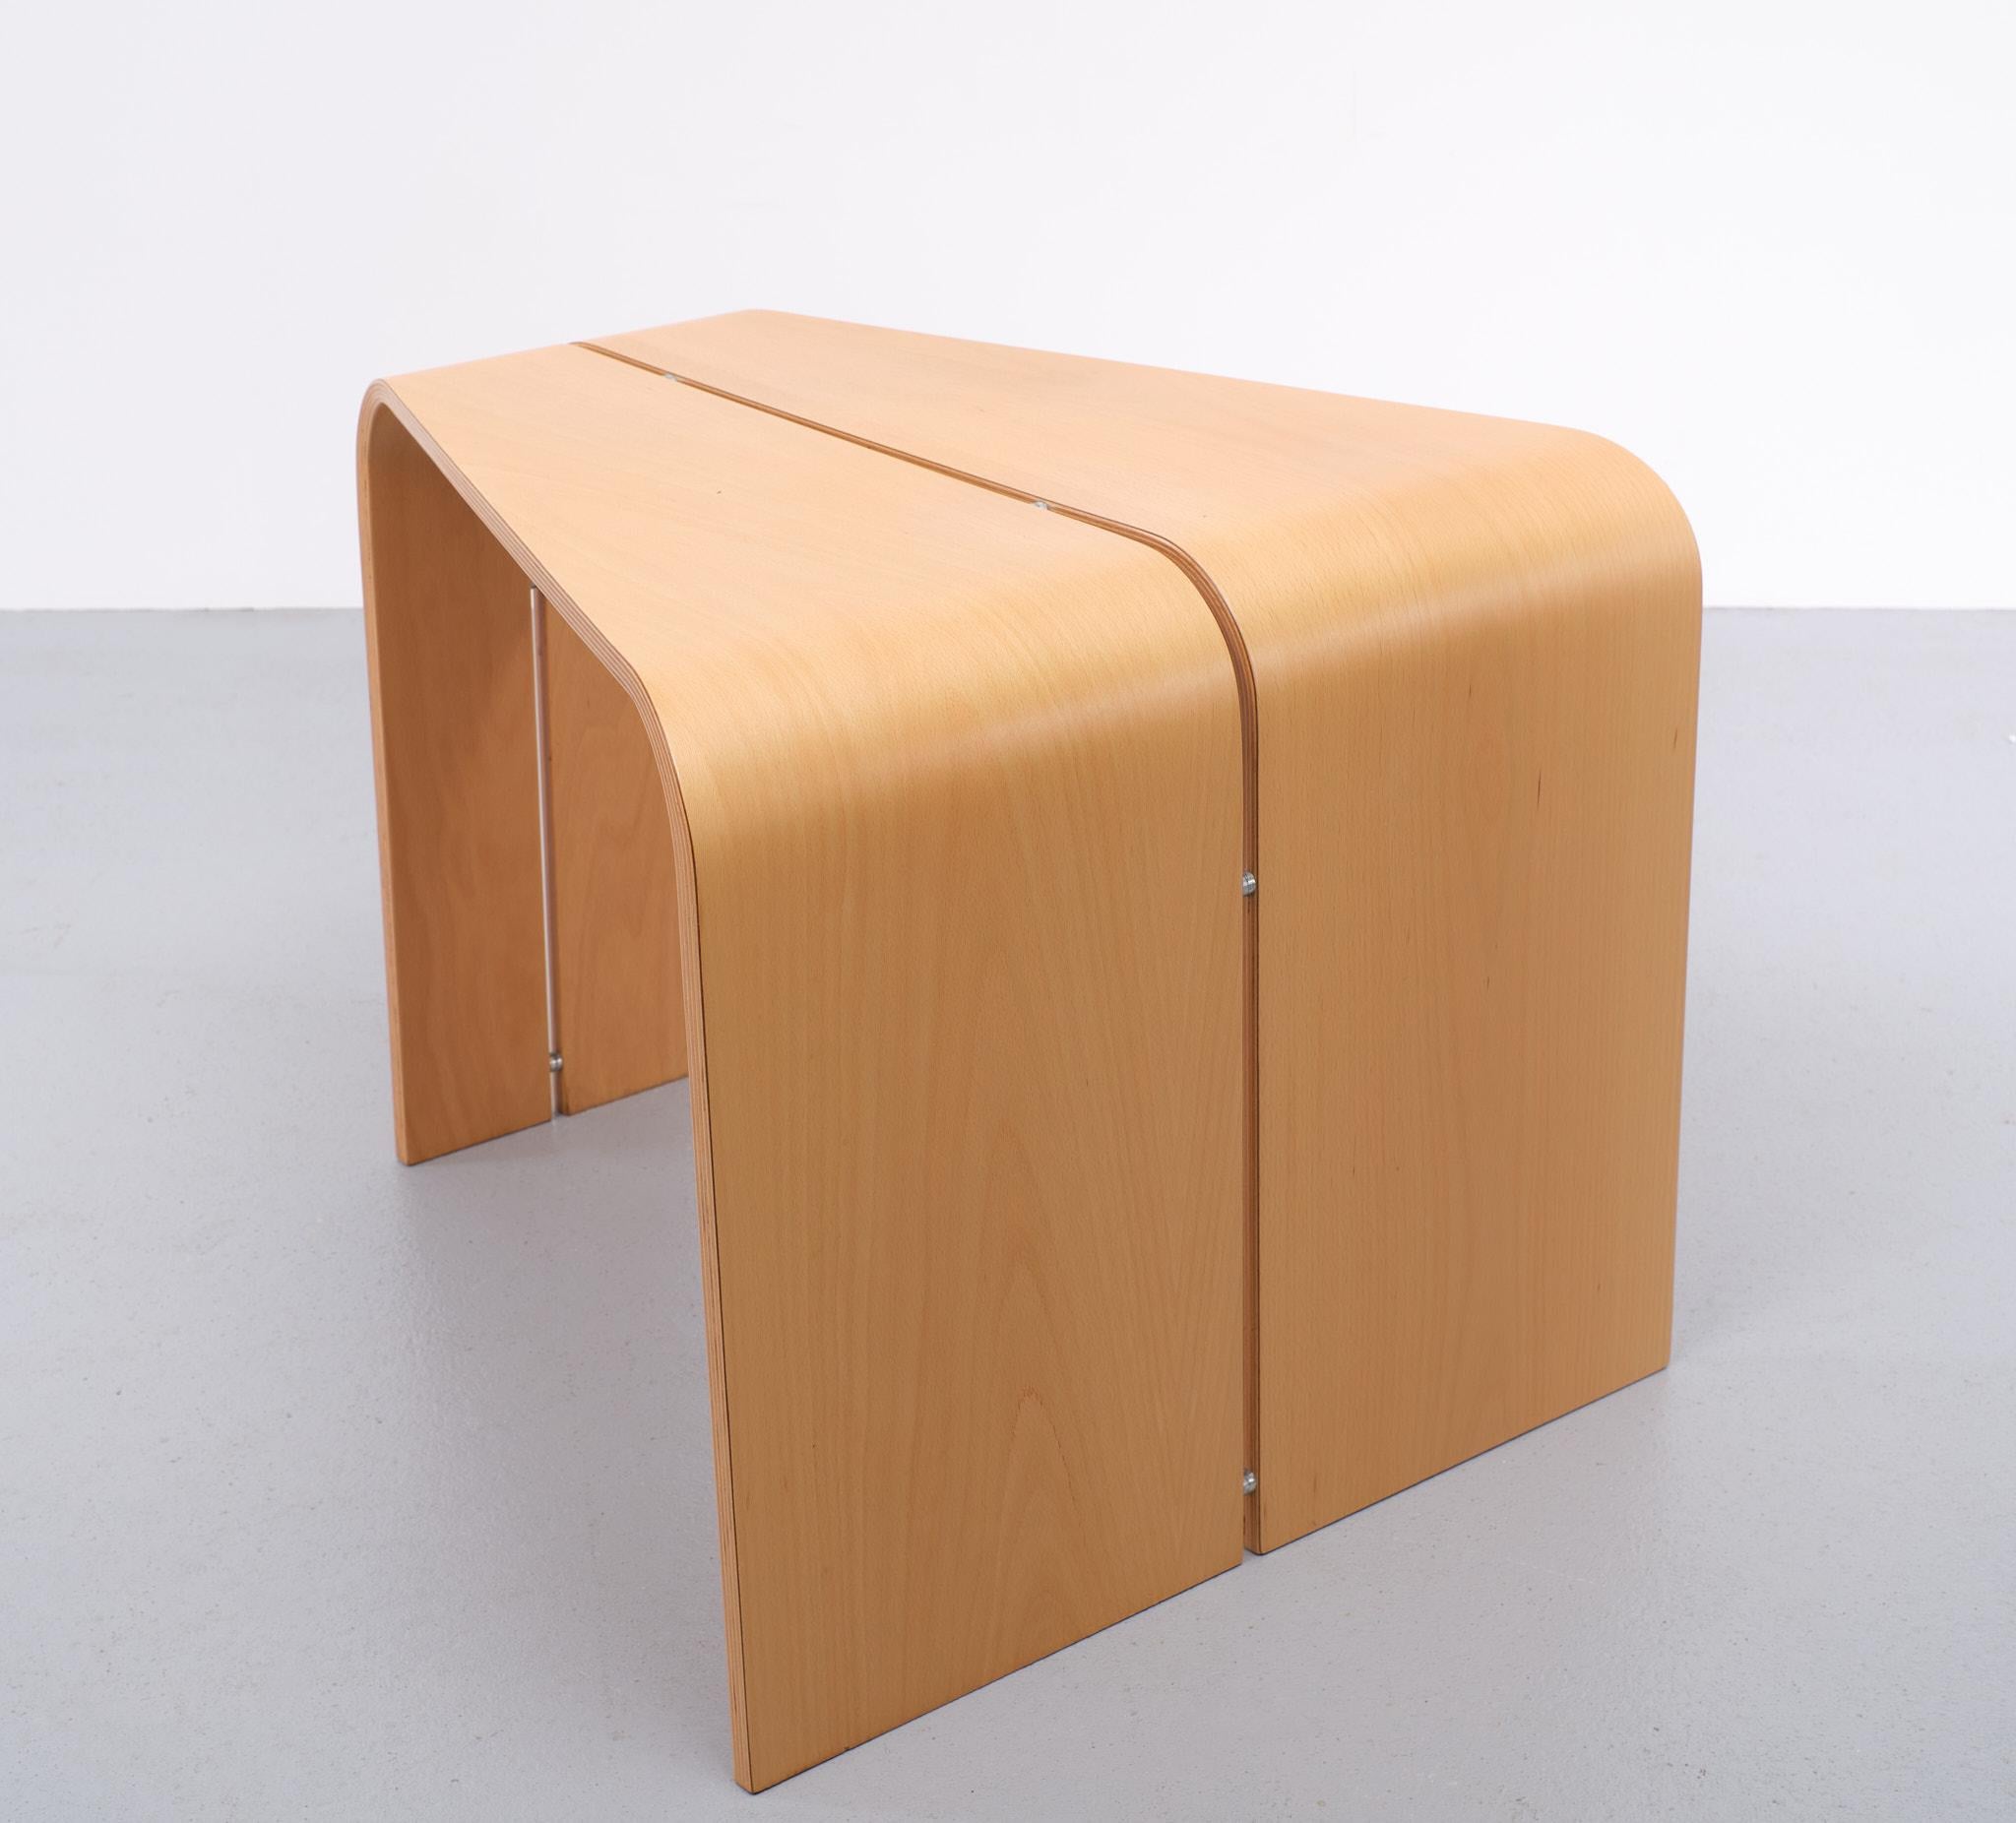 Late 20th Century Bent Plywood Triangular Sofa Table 1970s Scandinavian